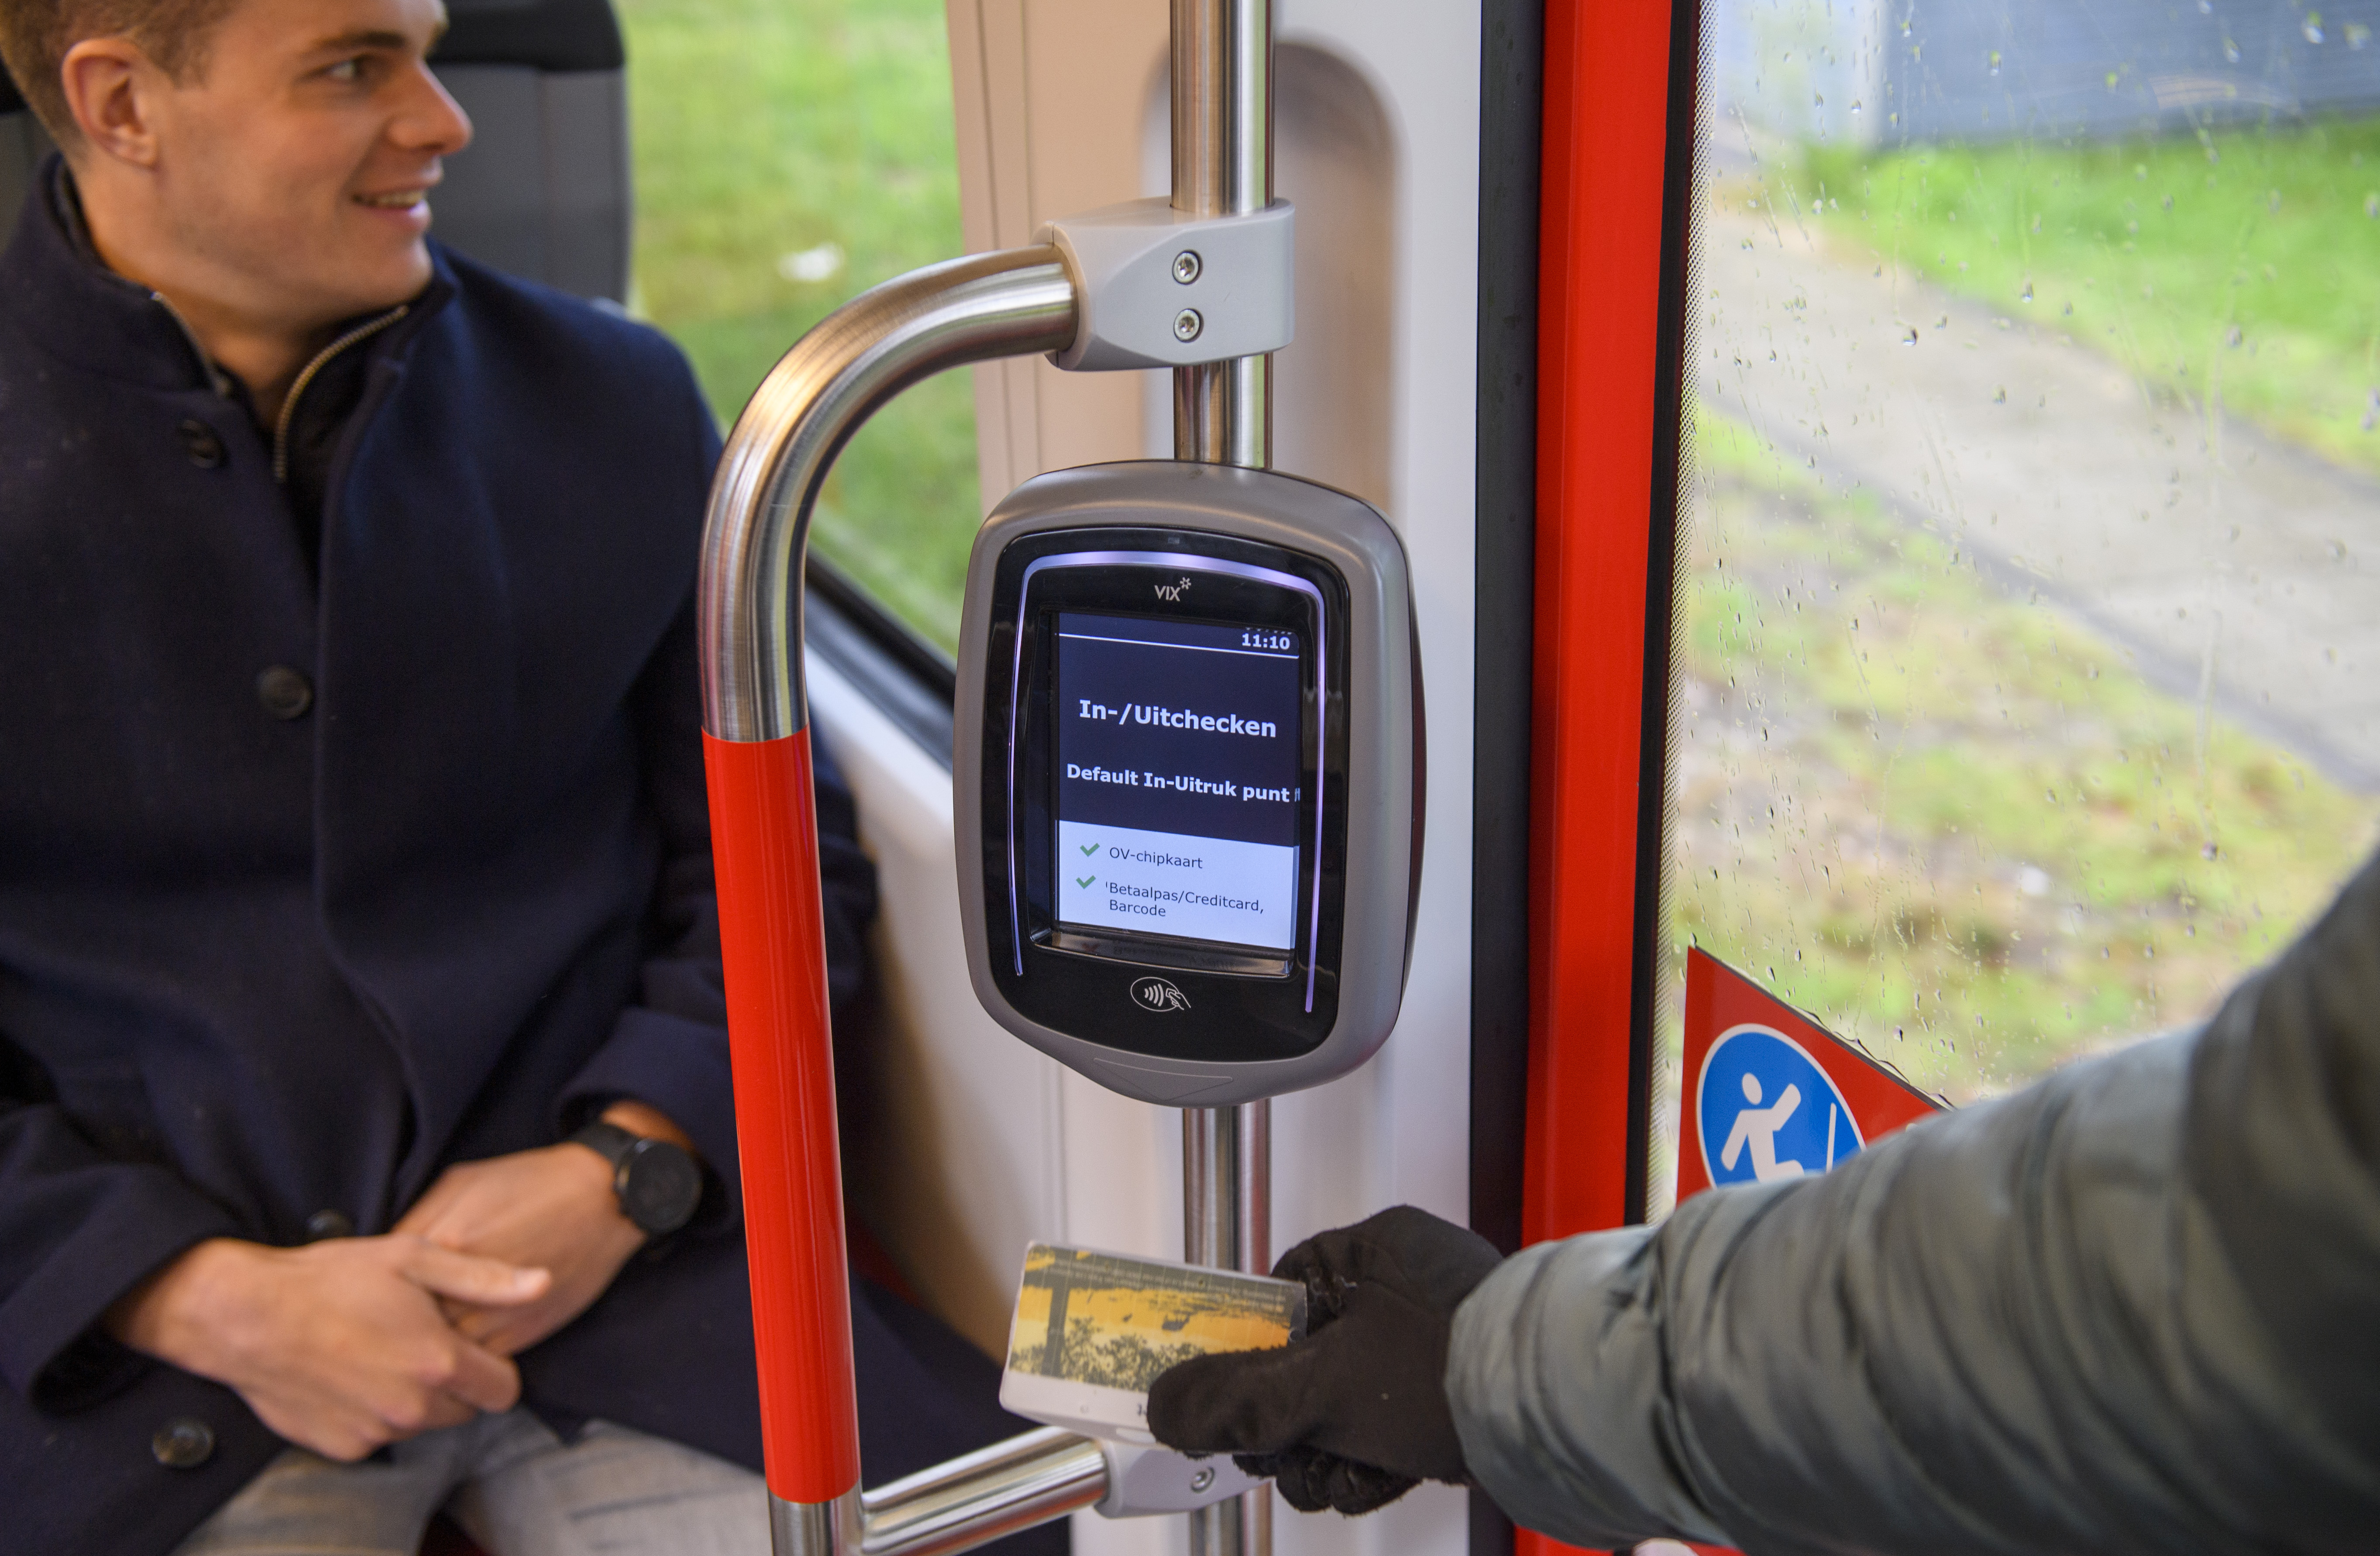 HTM reiziger checkt in met OV-chipkaart in HTM tram